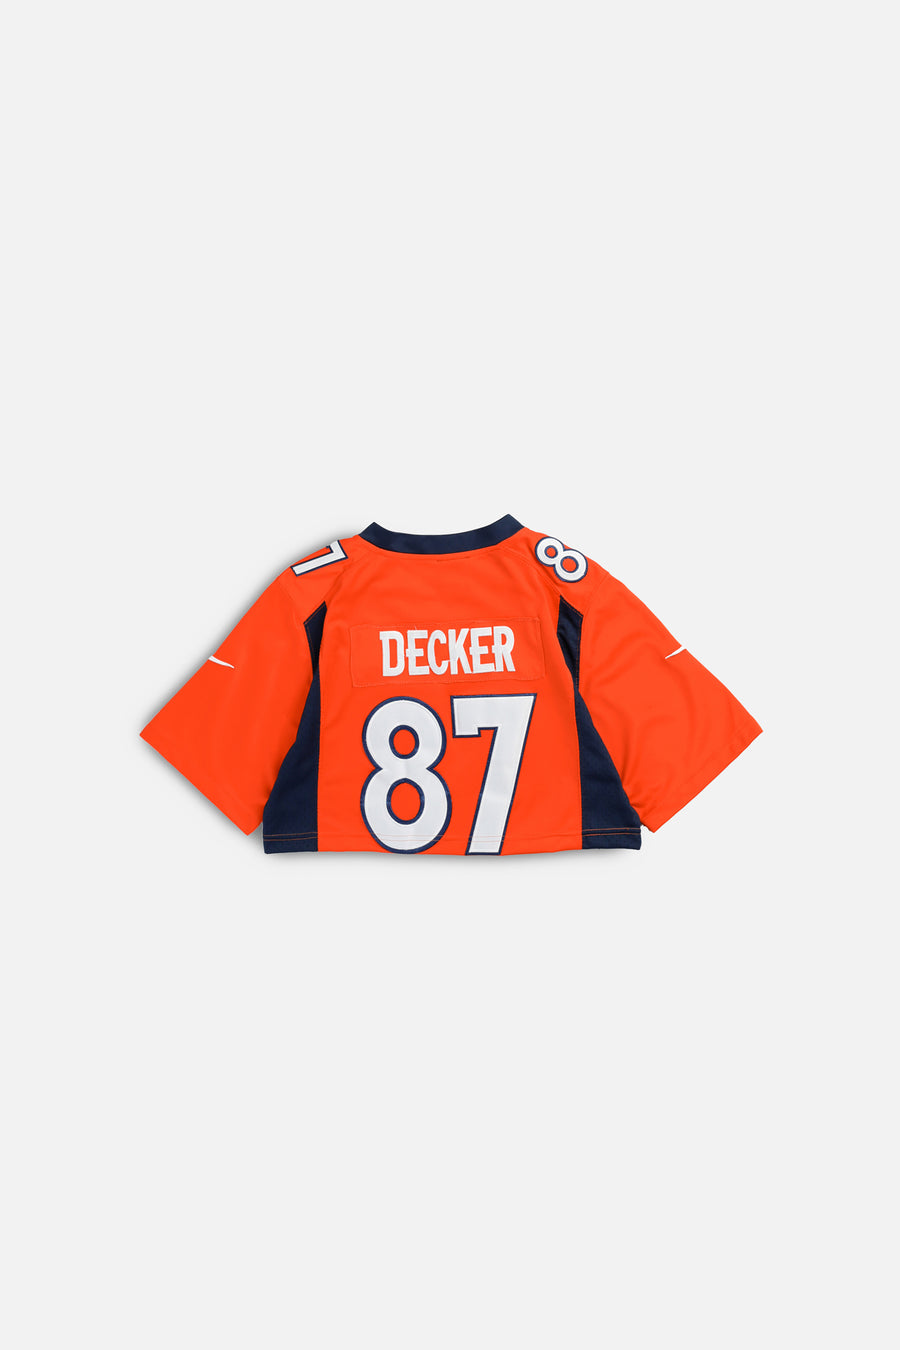 Rework Crop Denver Broncos NFL Jersey - XS